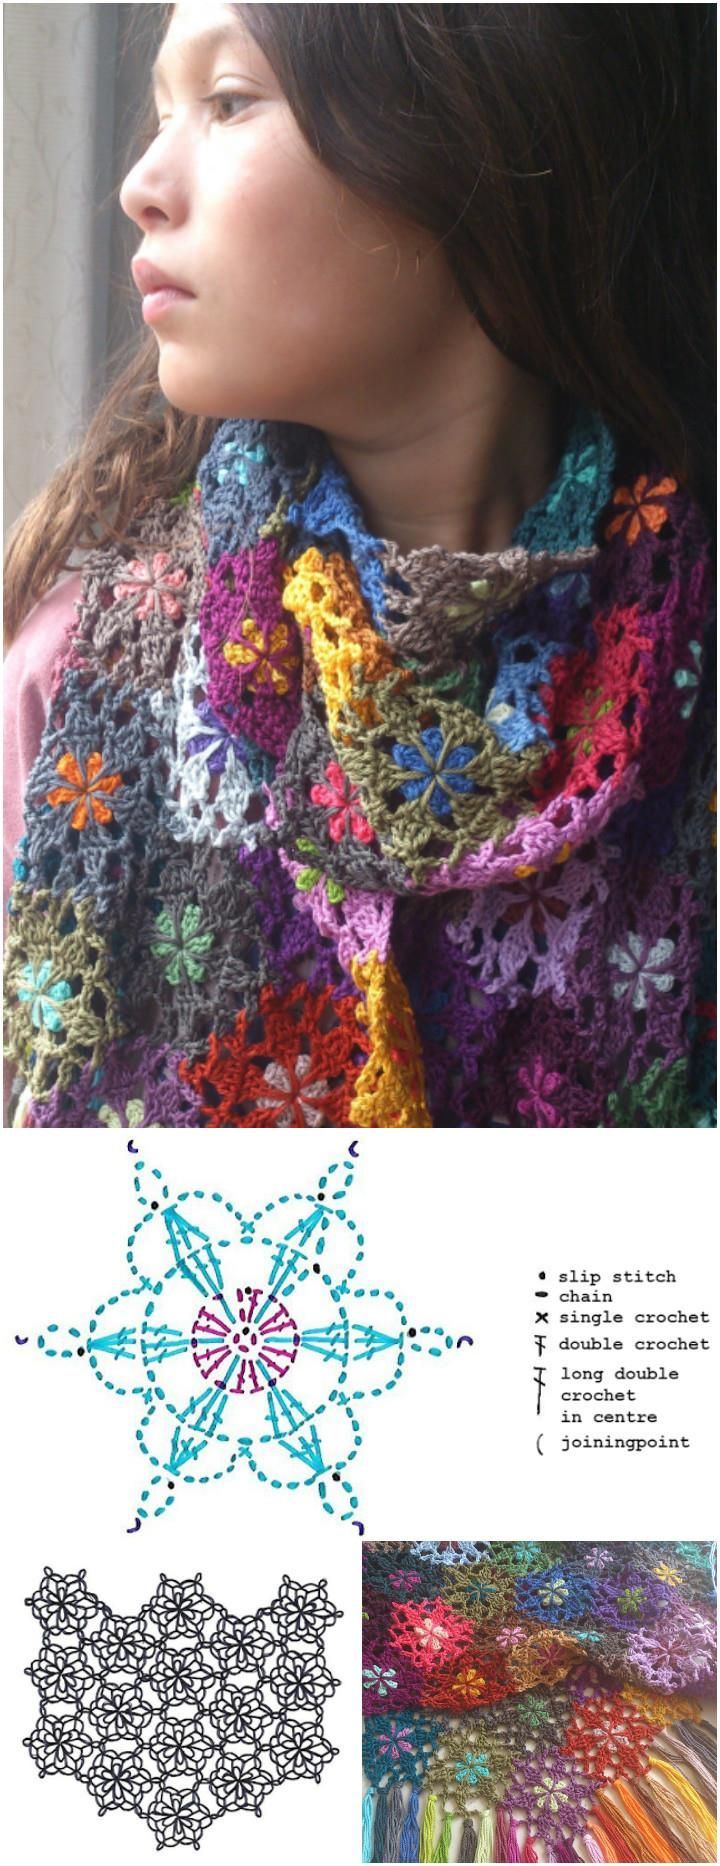 101 Free Crochet Patterns – Full Instructions for Beginners